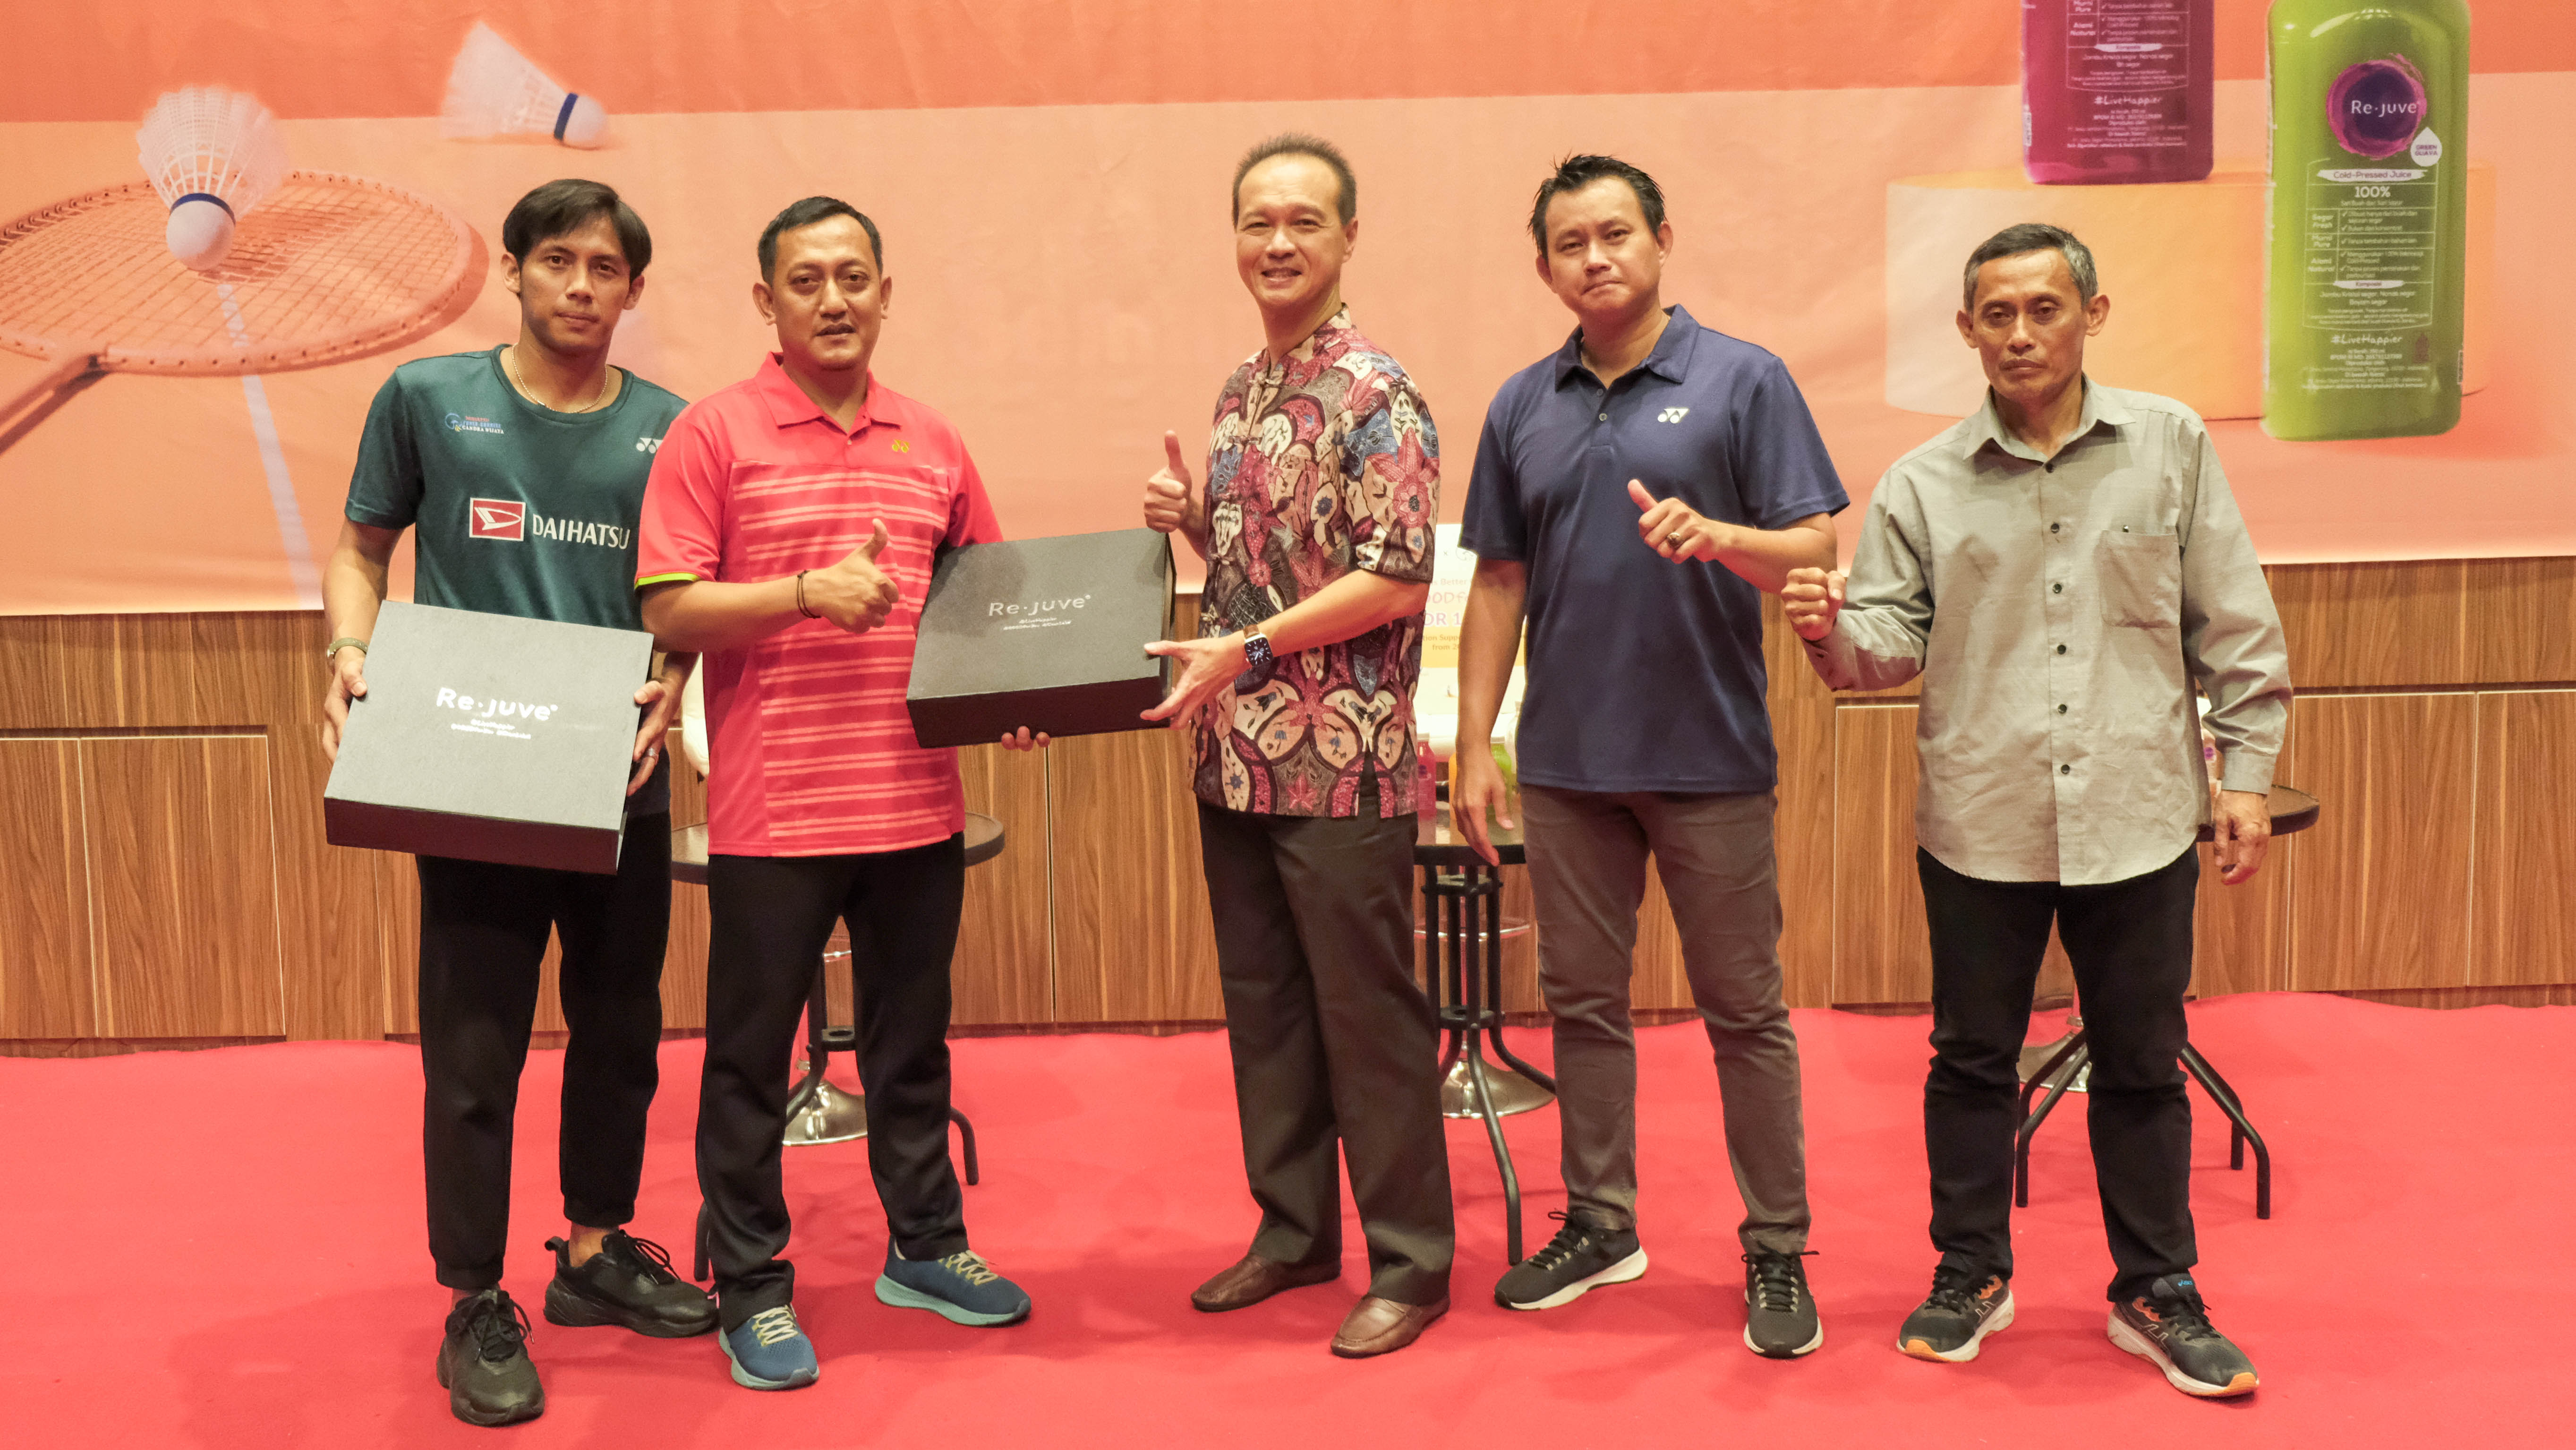 Re.juve Berkolaborasi dengan Candra Wijaya International Badminton Centre